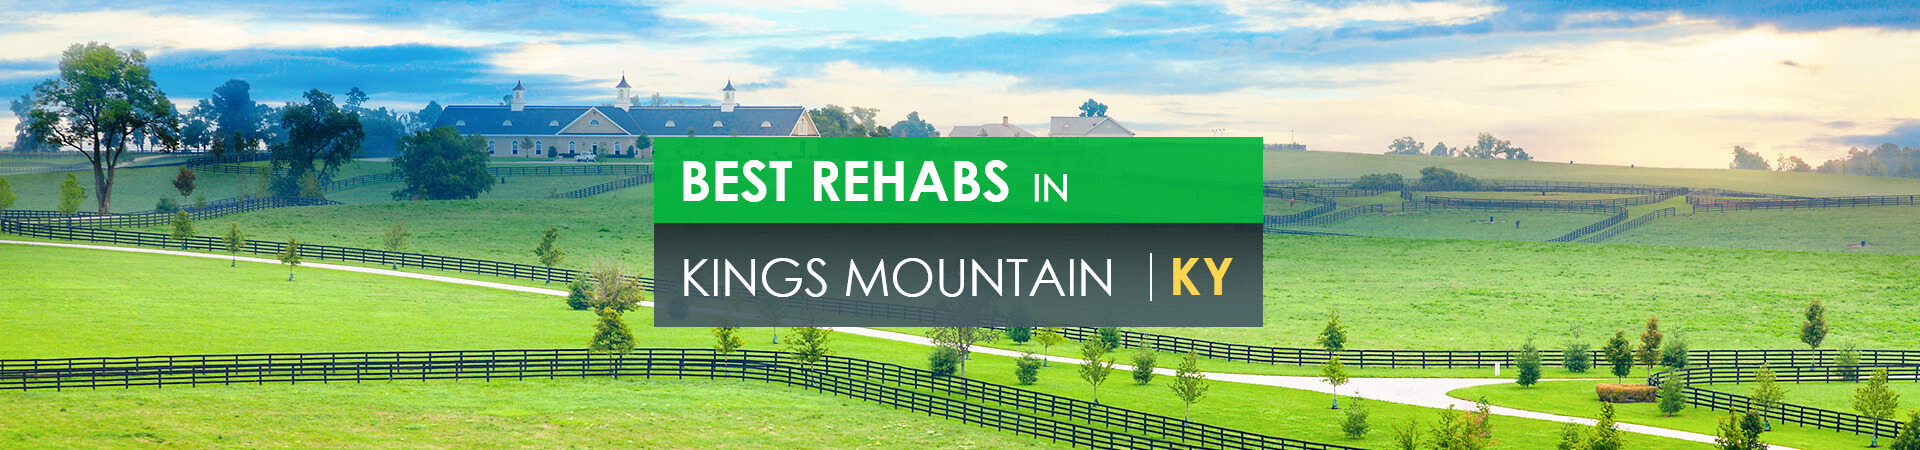 Best rehabs in Kings Mountain, KY